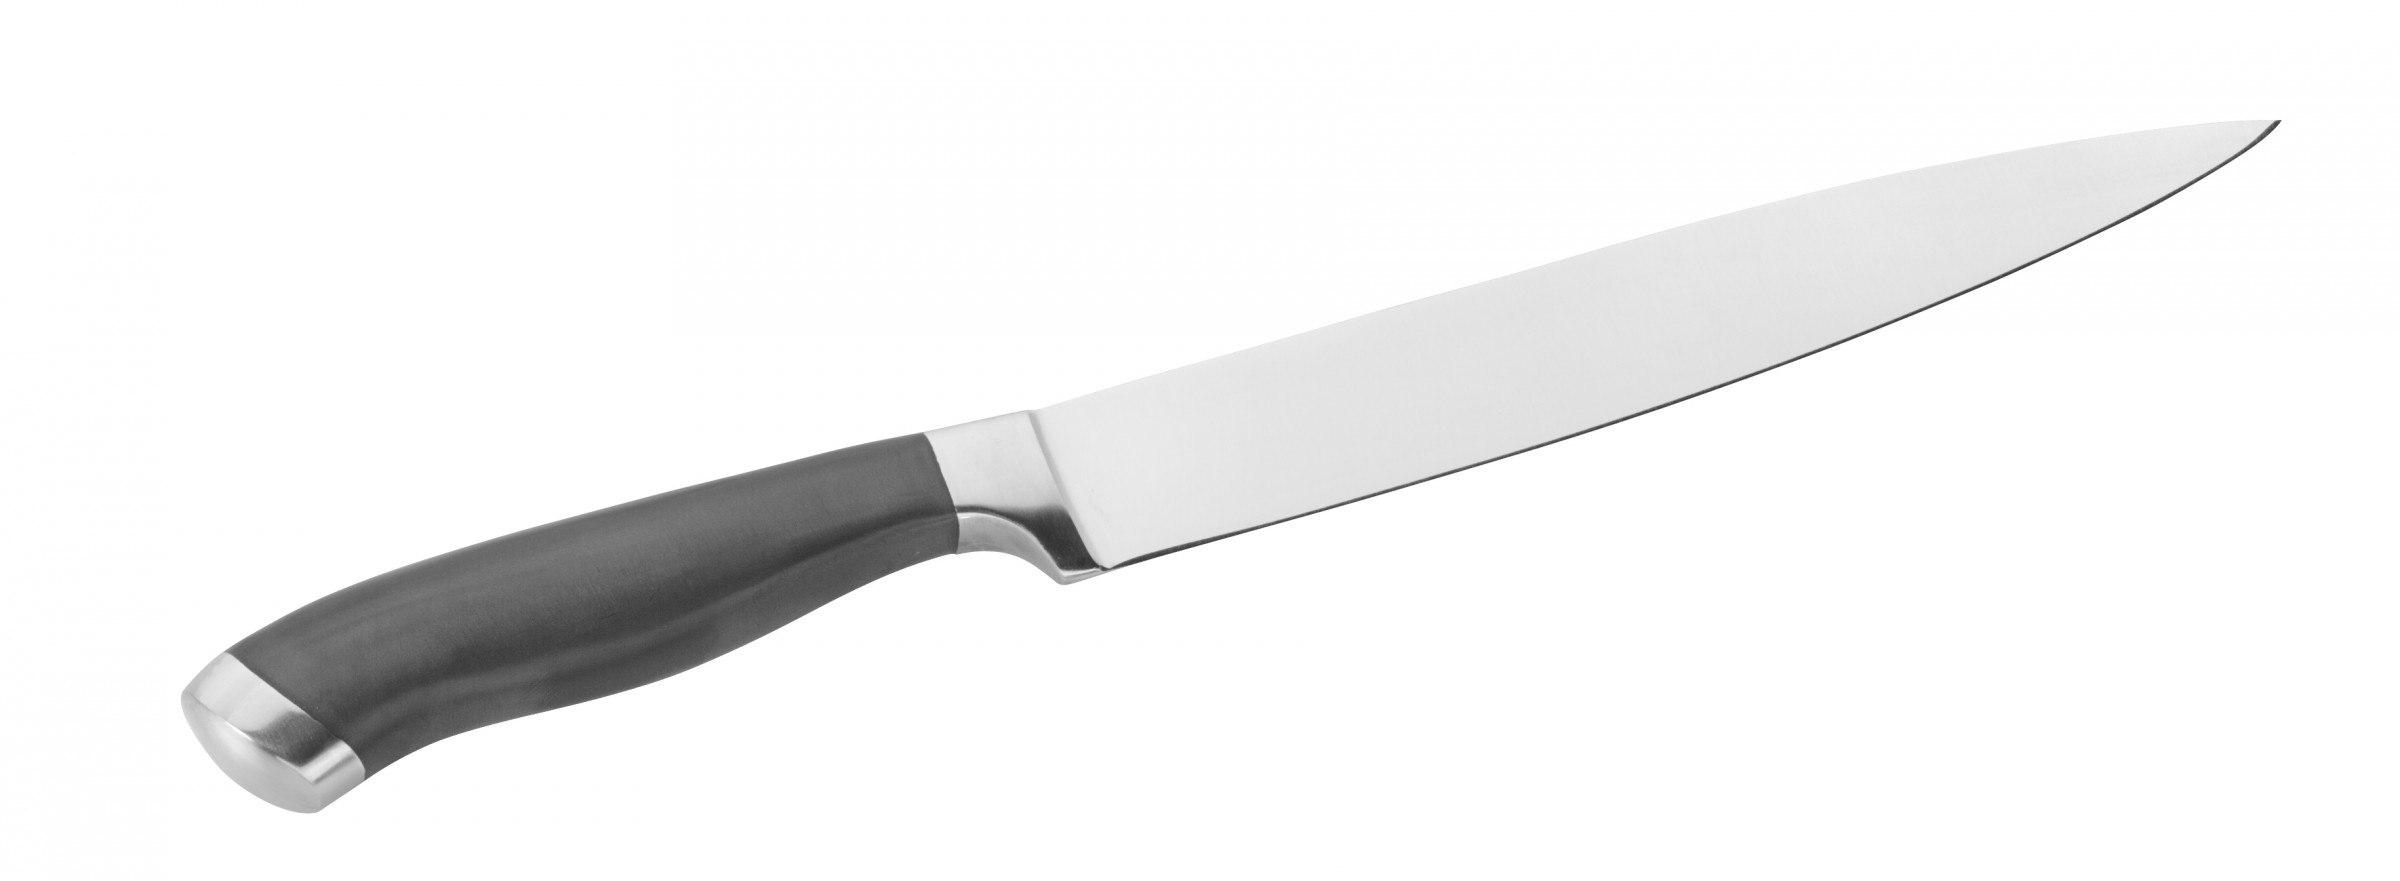 PINTINOX Profi Knife Block Professional With 6 Cooking Knives